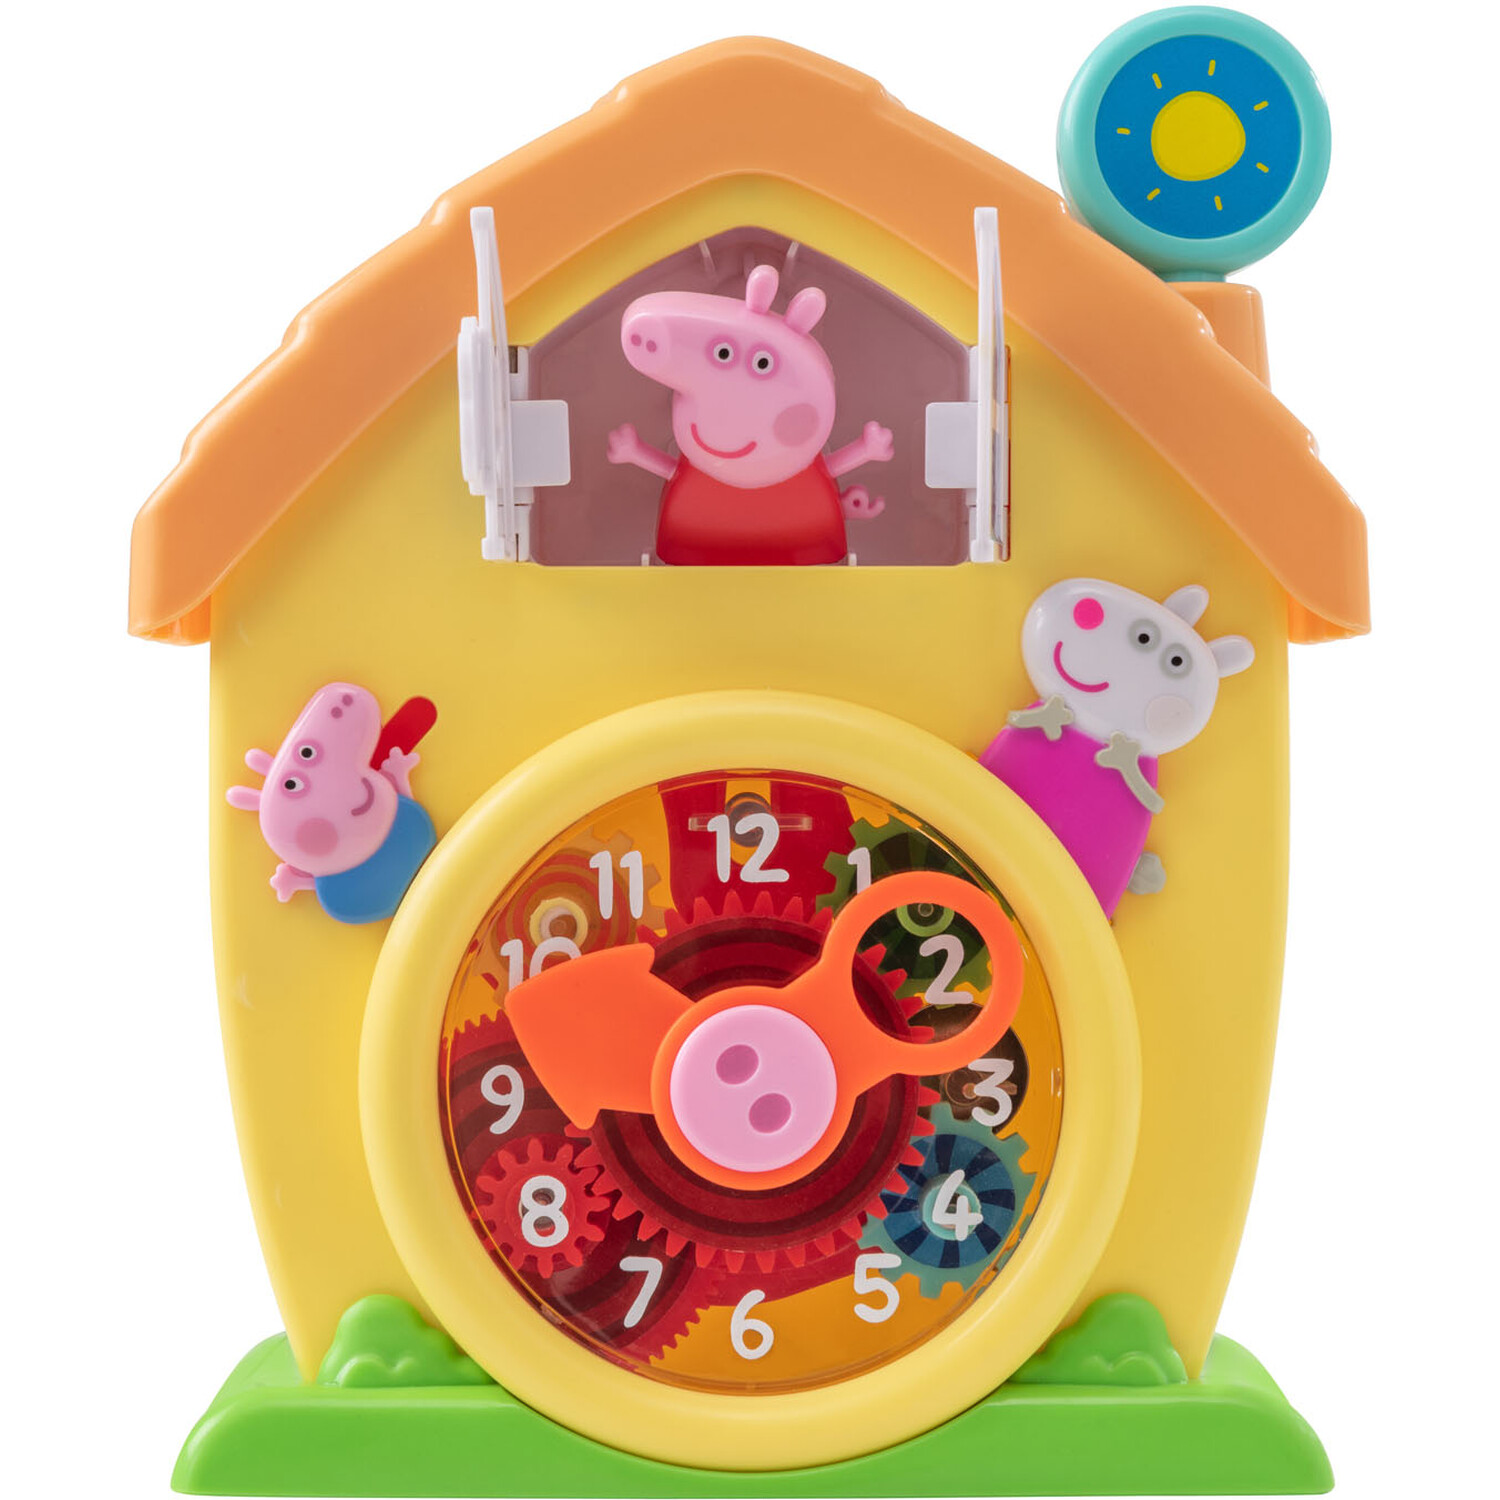 Peppa's Cuckoo Clock Image